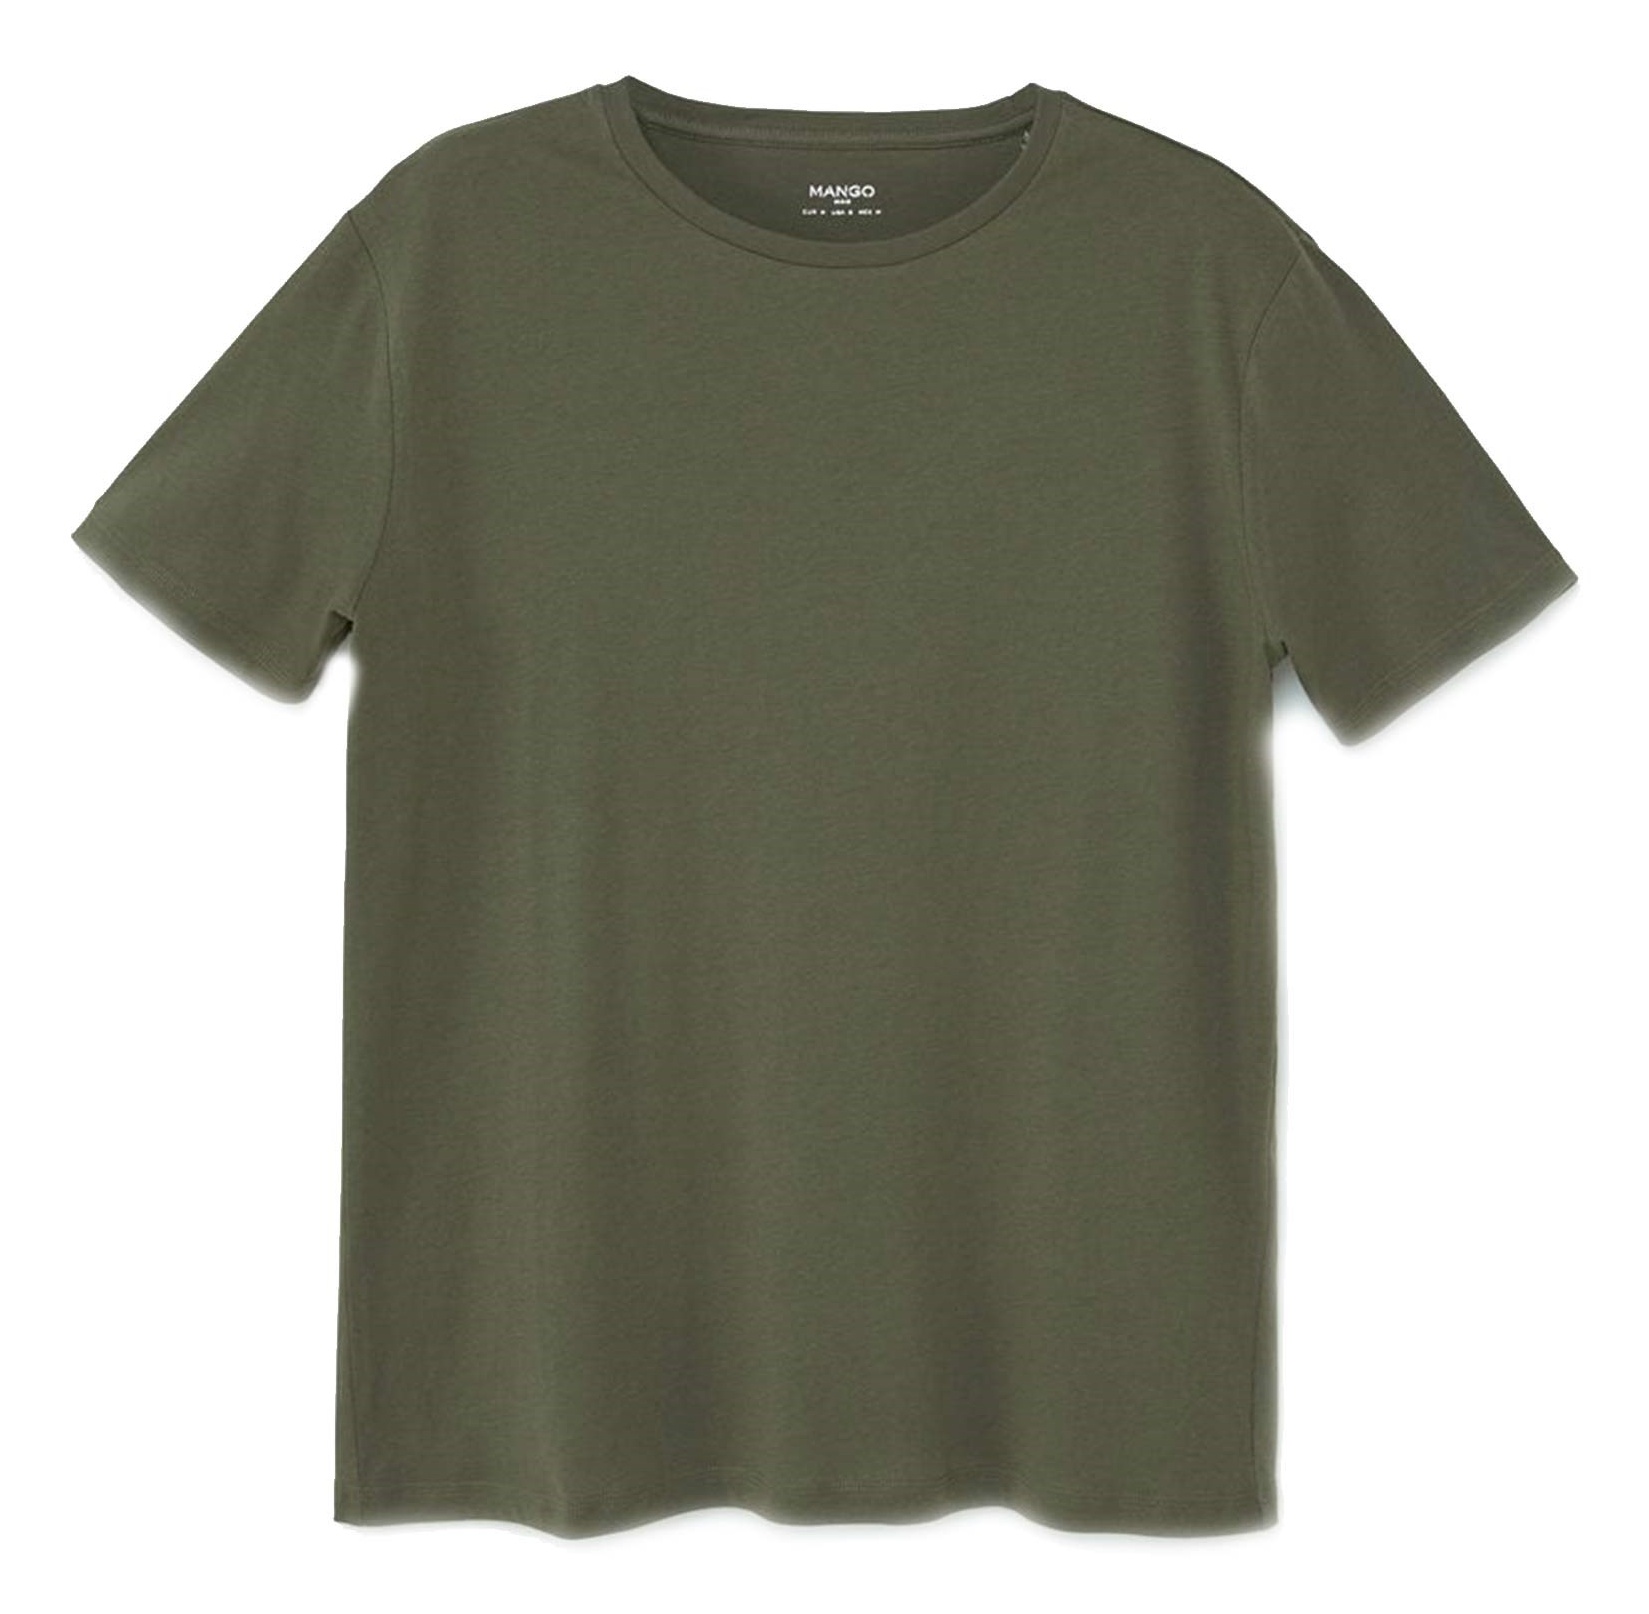 تی شرت نخی یقه گرد مردانه - مانگو - زيتوني - 1